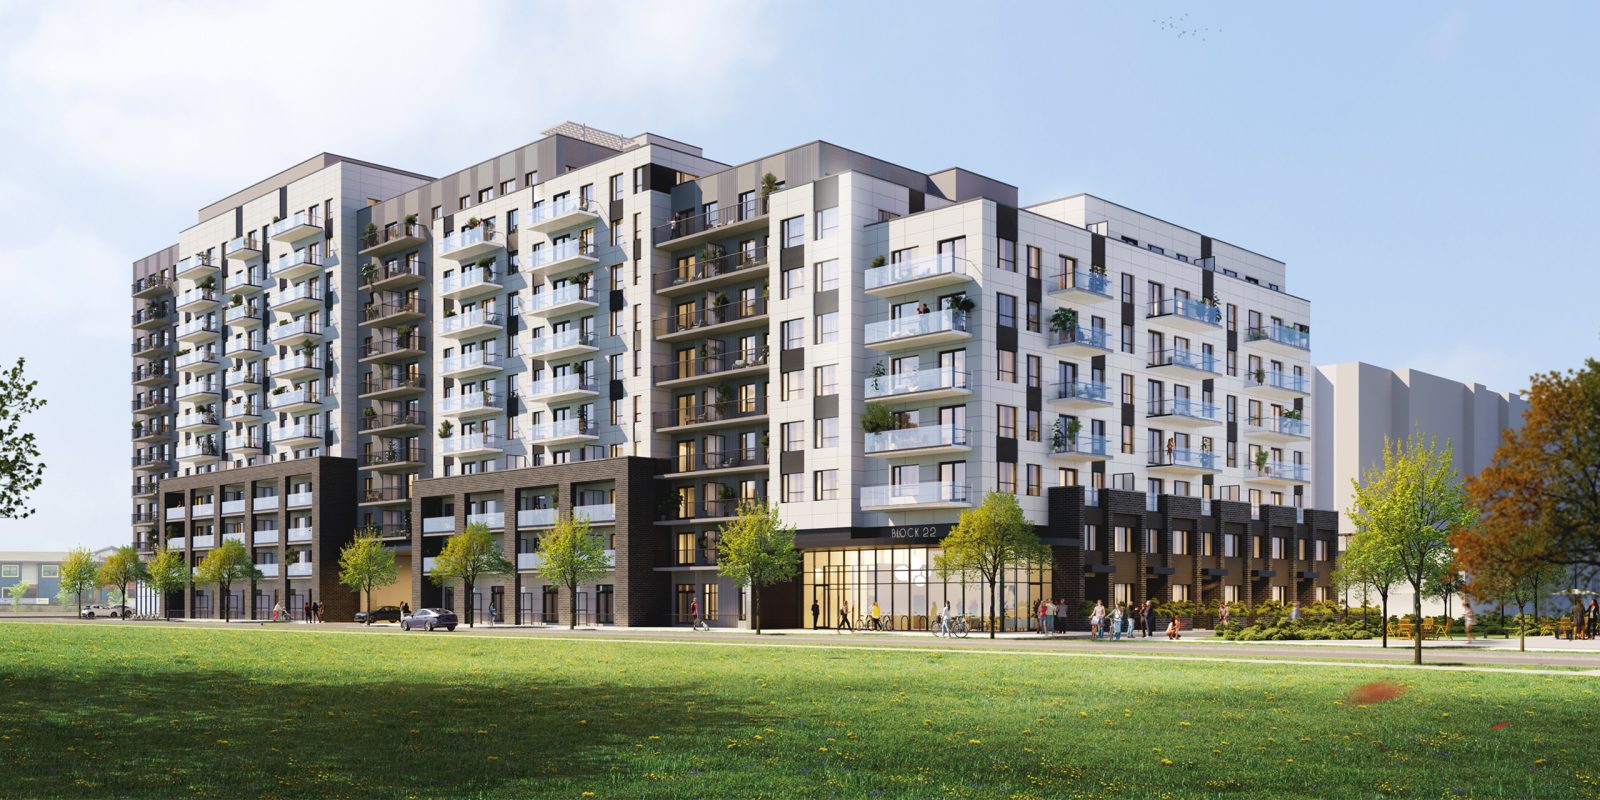 Gracorp-Vancouver-Block 22-Real-Estate-Development